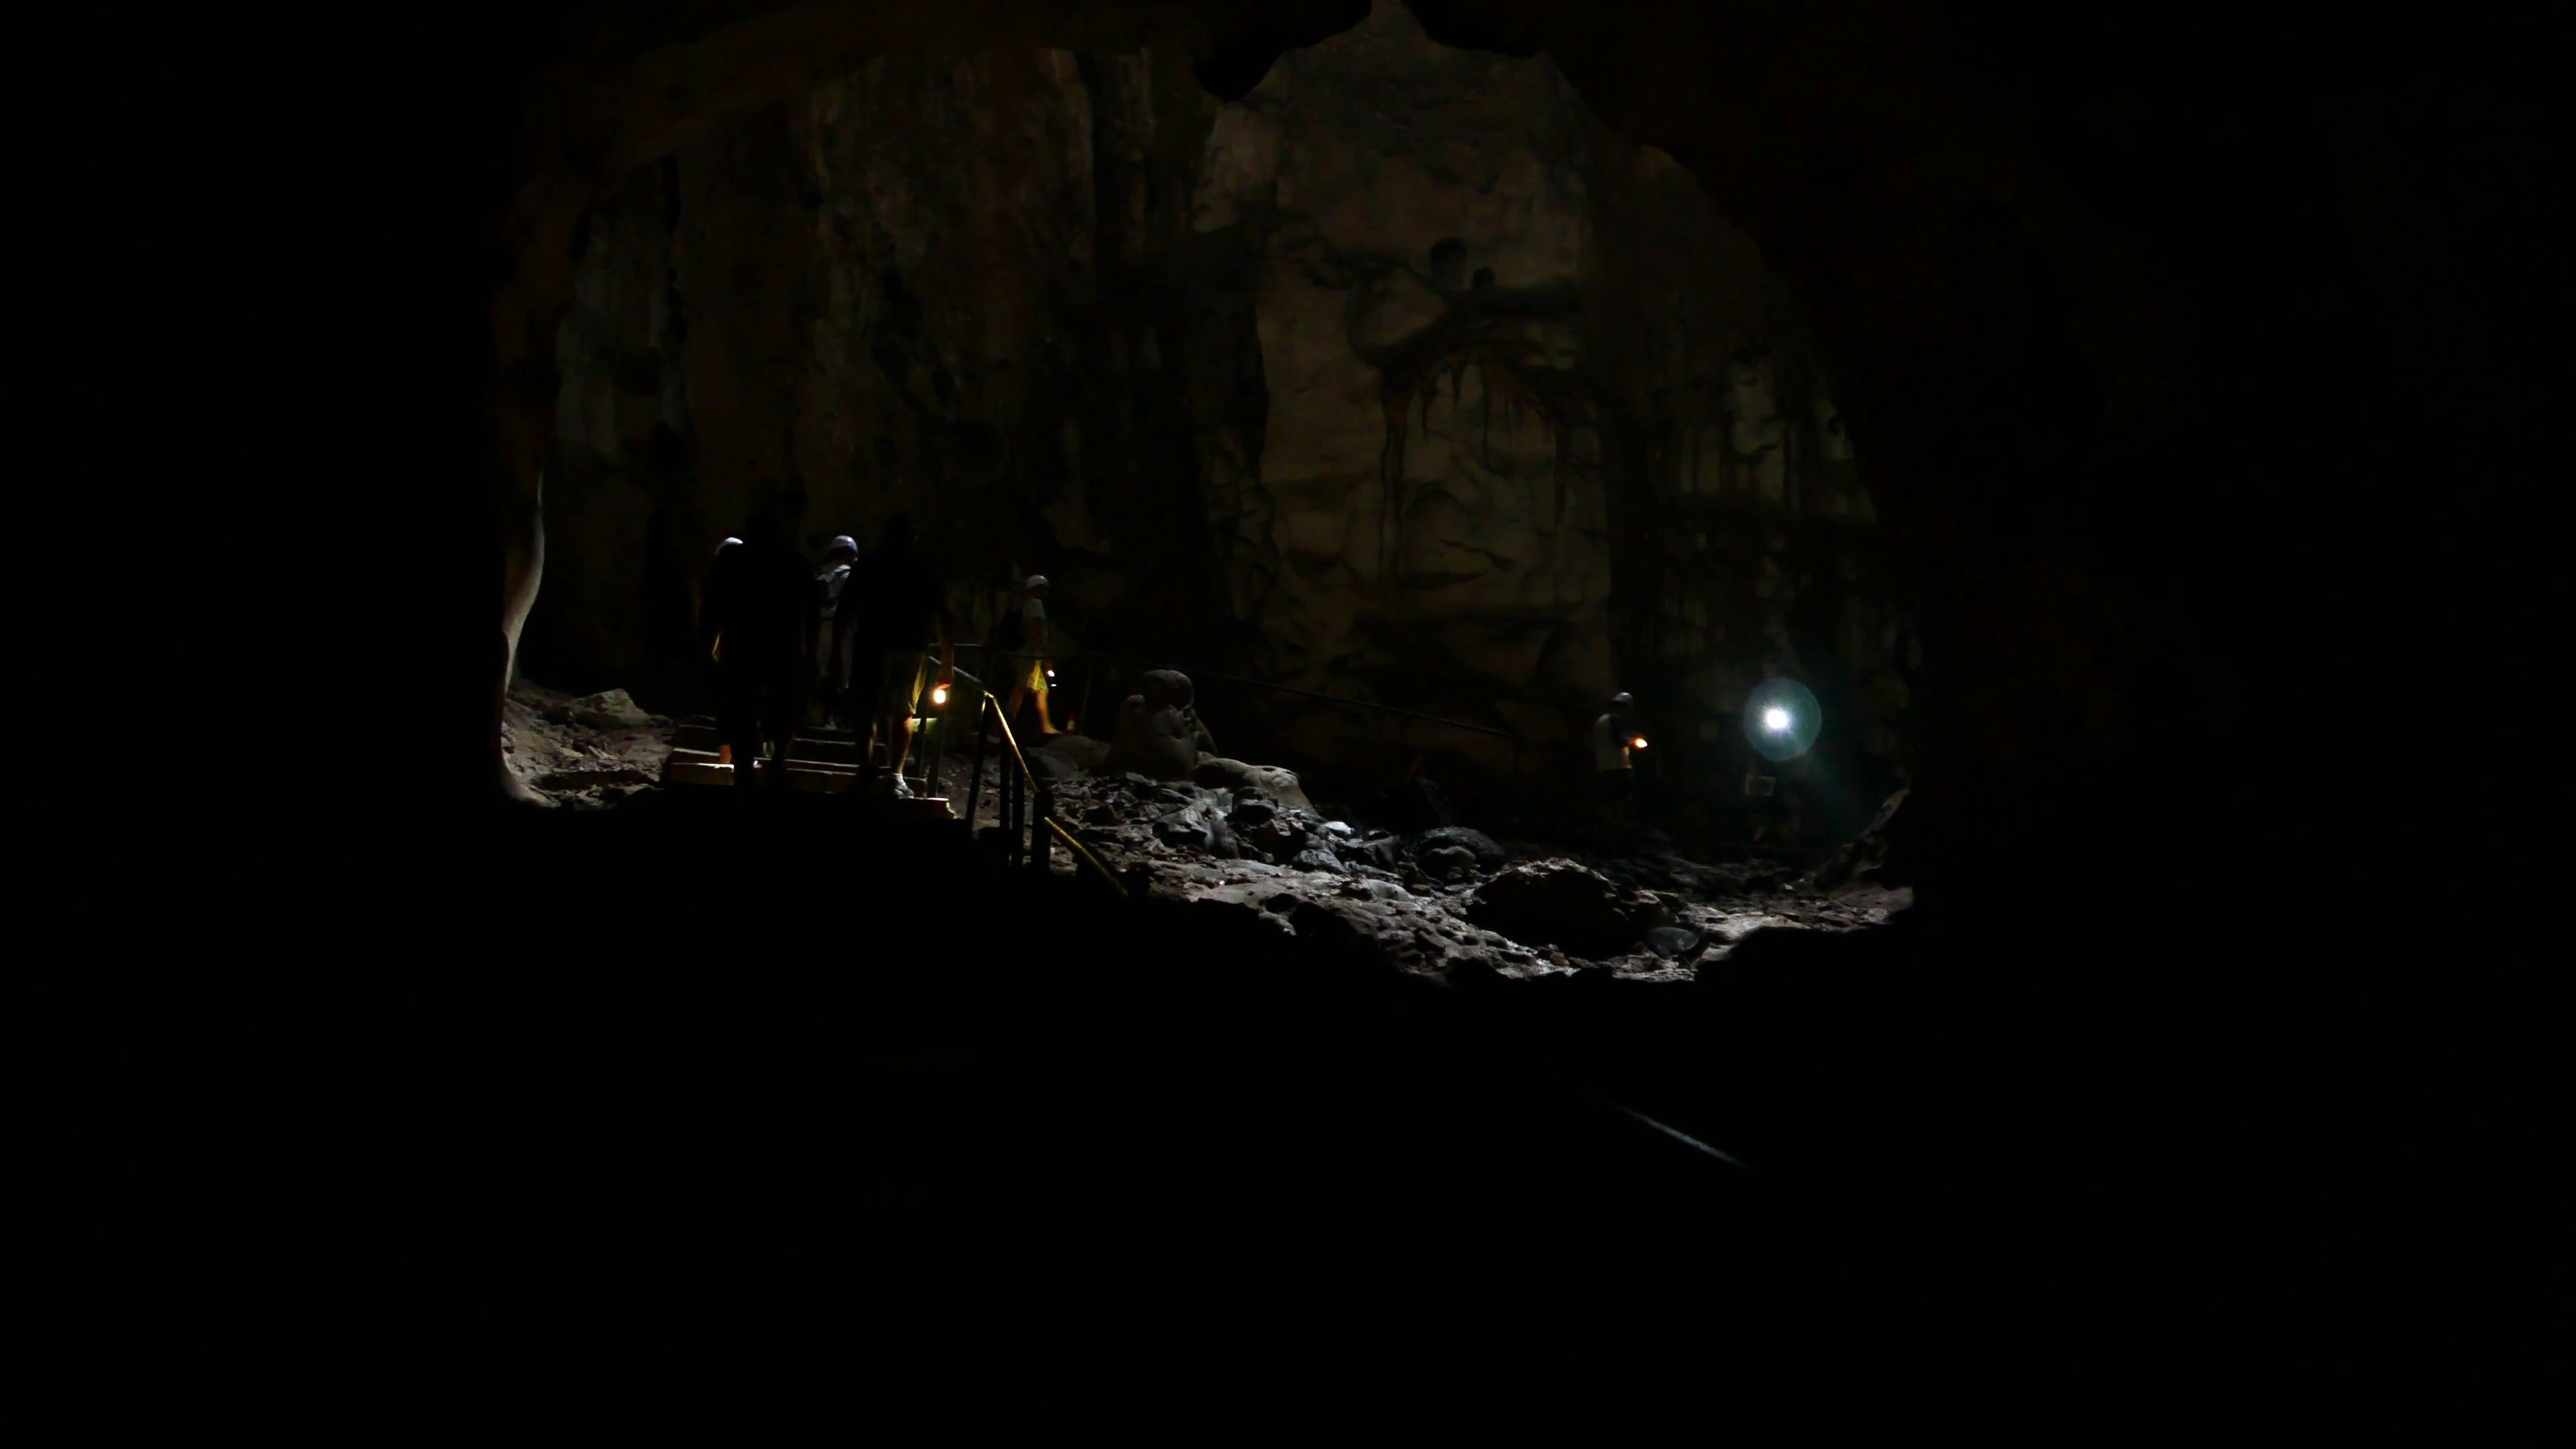 Cavers group walking in dim light under mystical cave vaults, dark ...